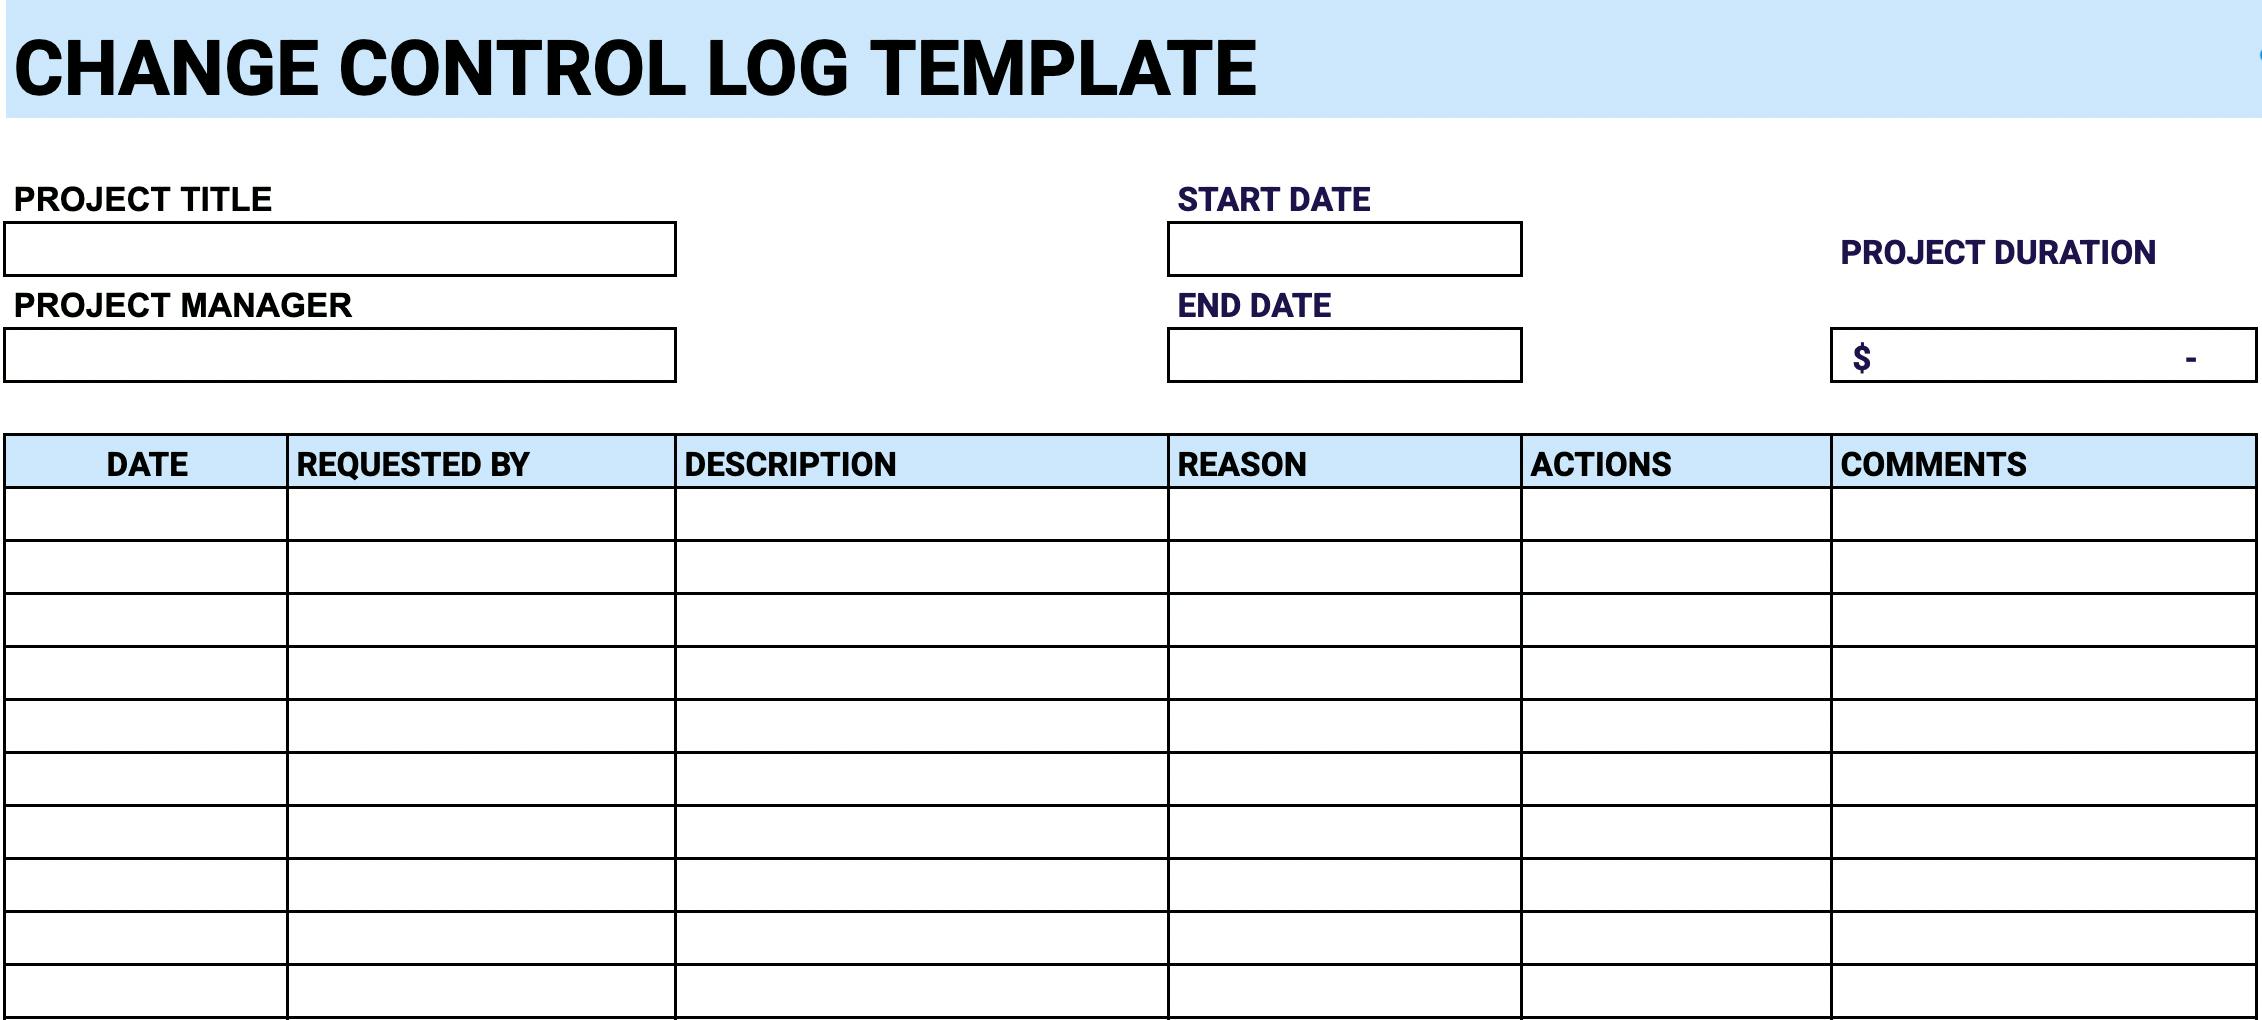 Change control log template